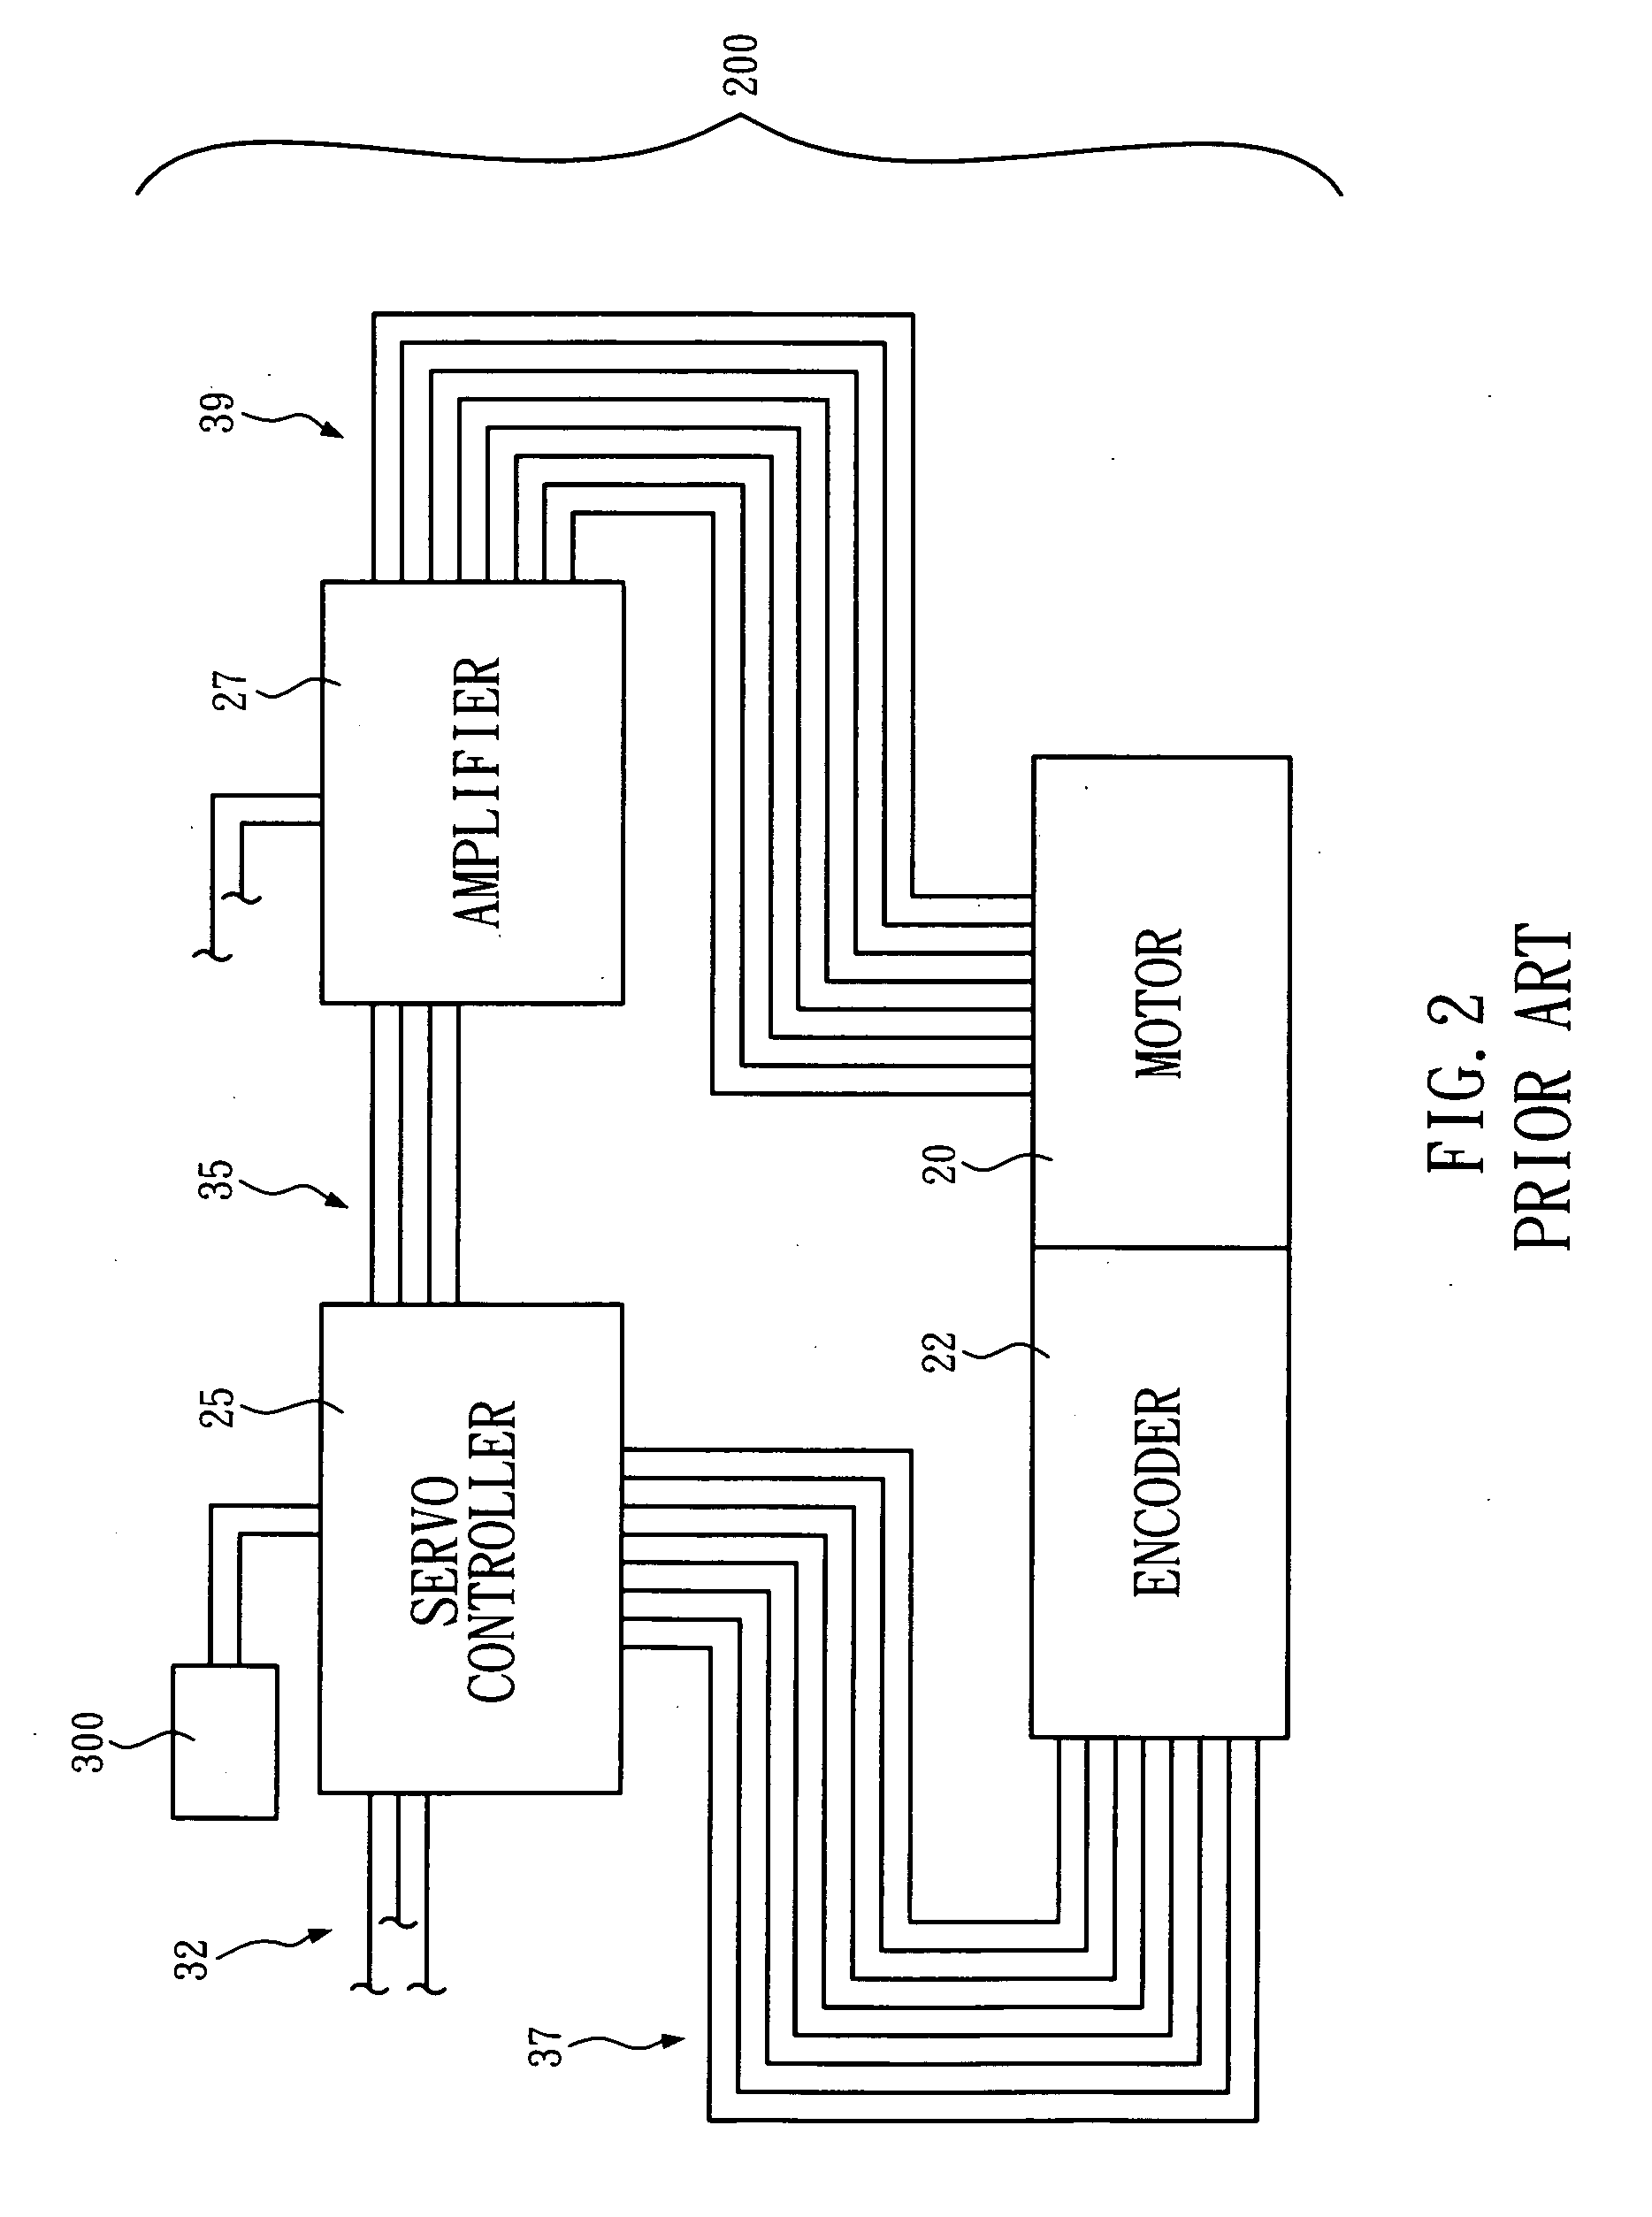 Integrated linear motor